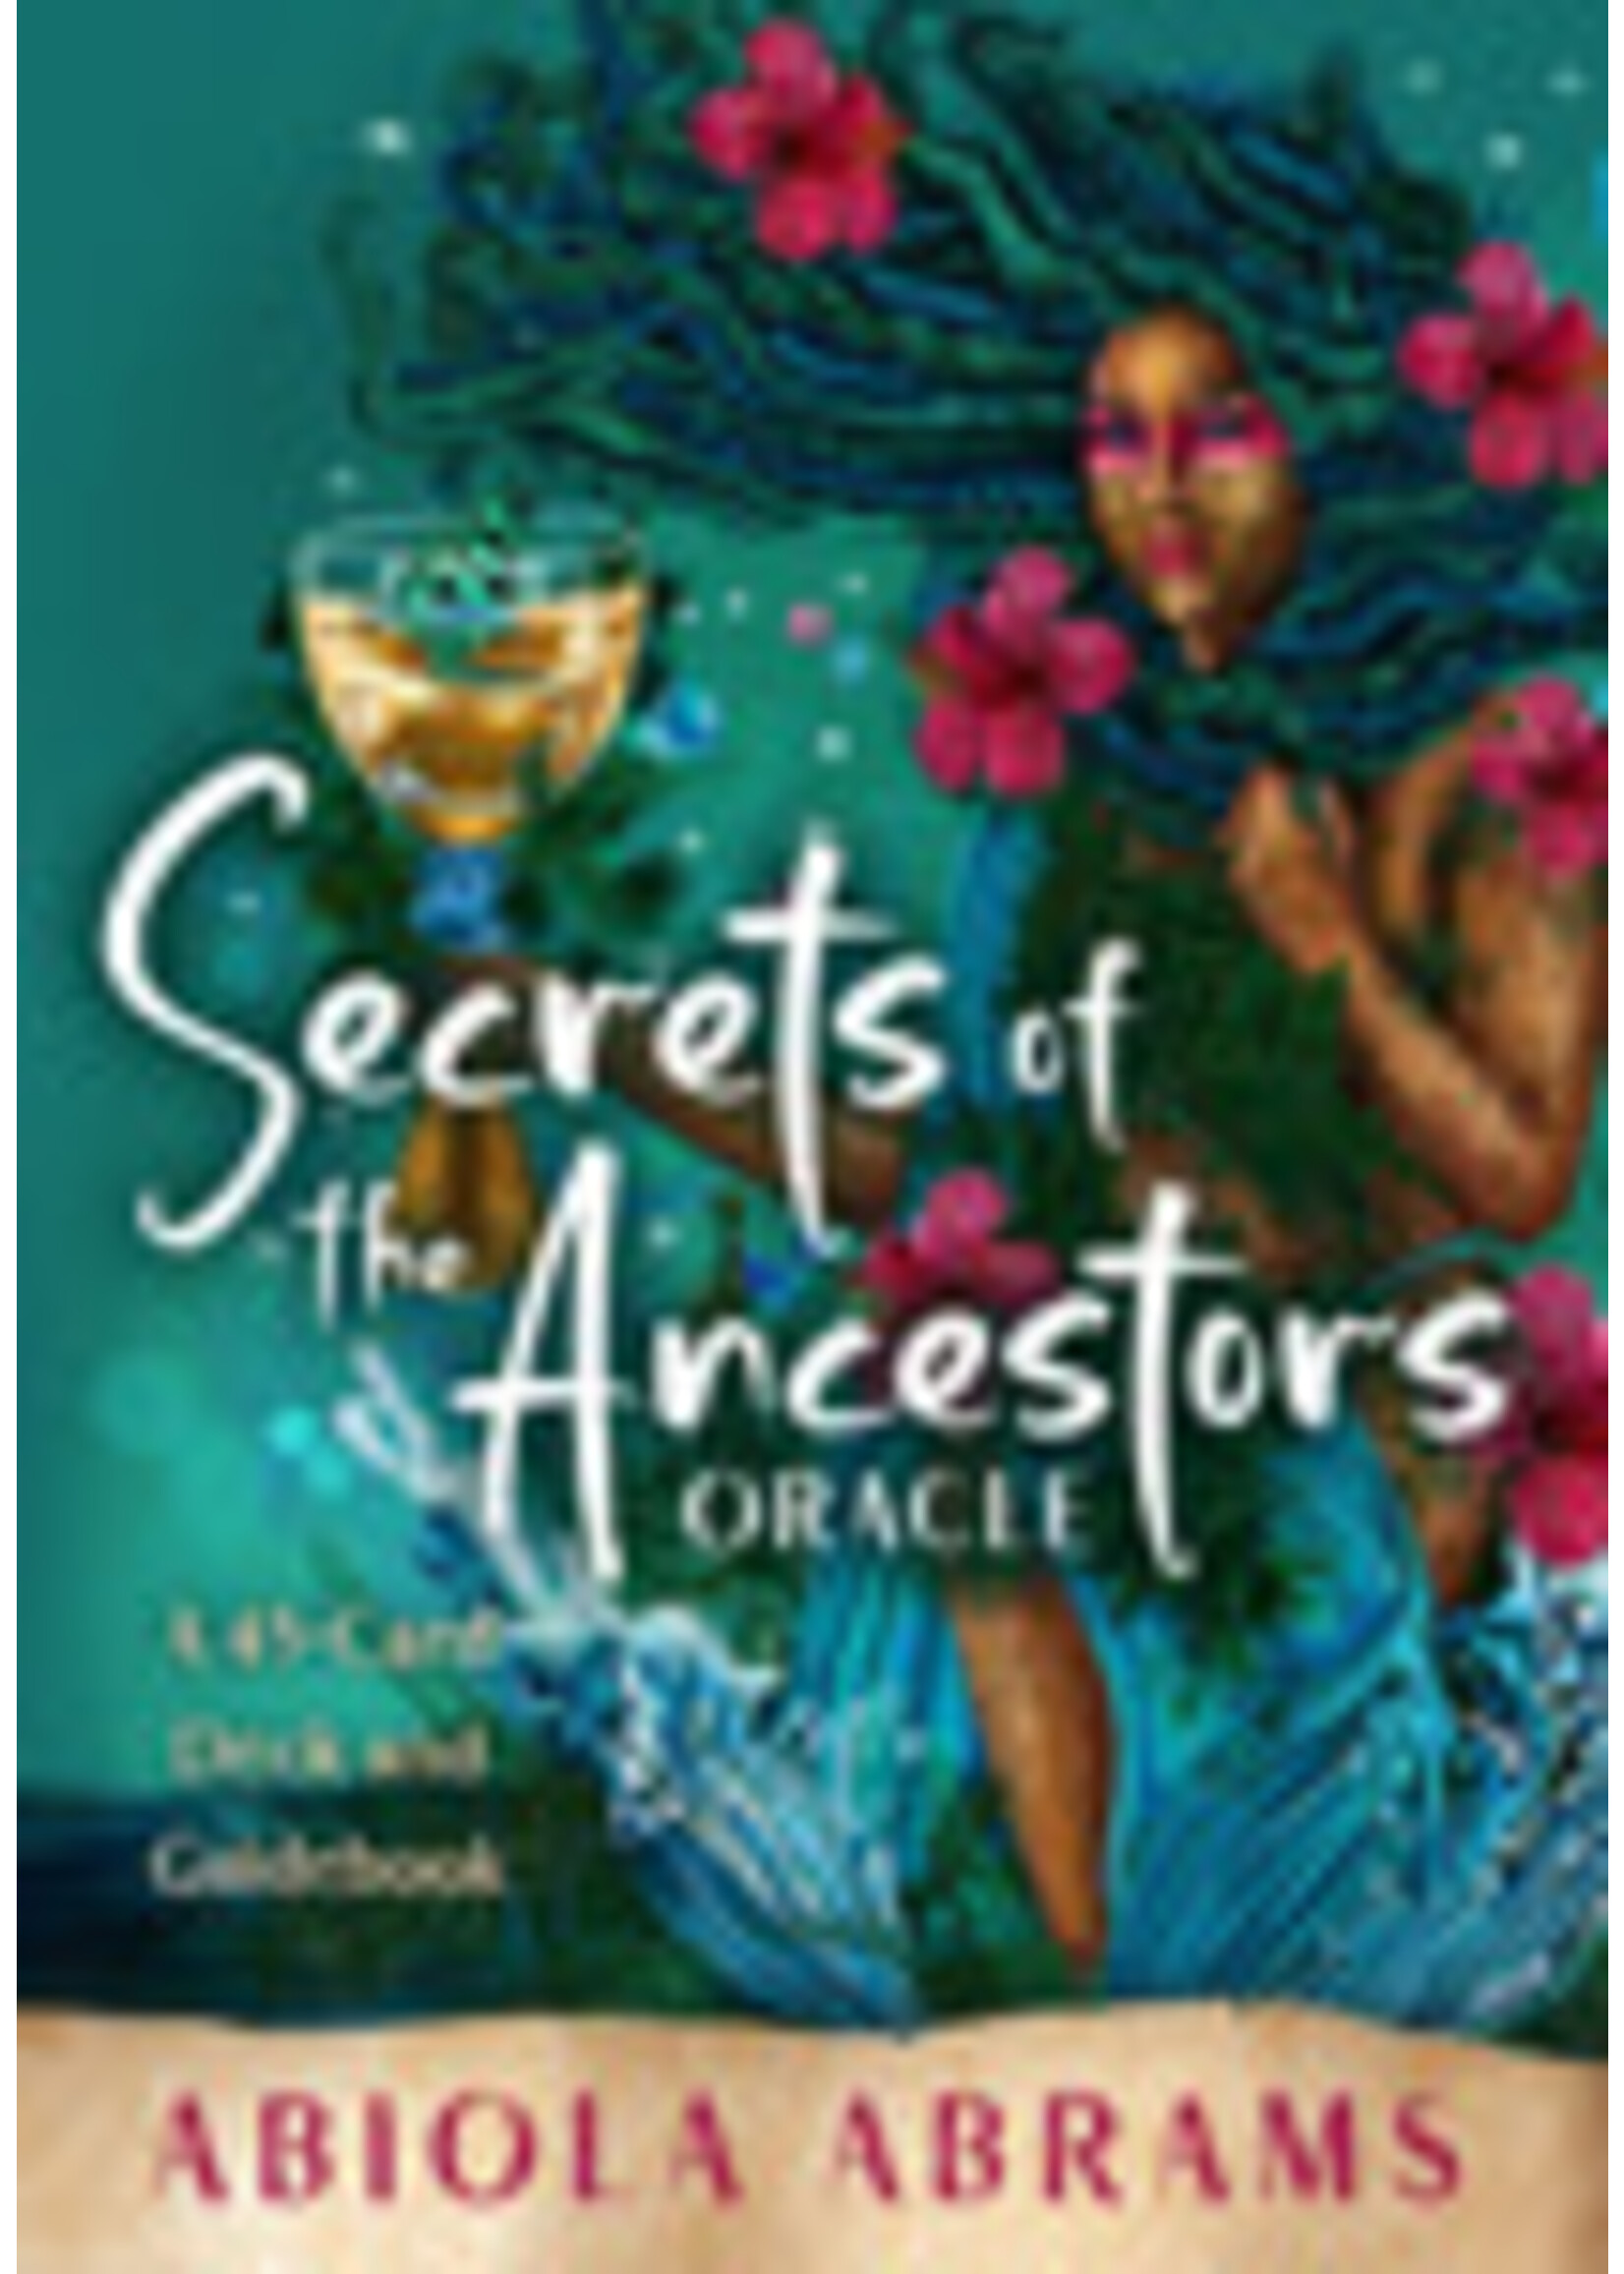 Secrets of the Ancestors Oracle